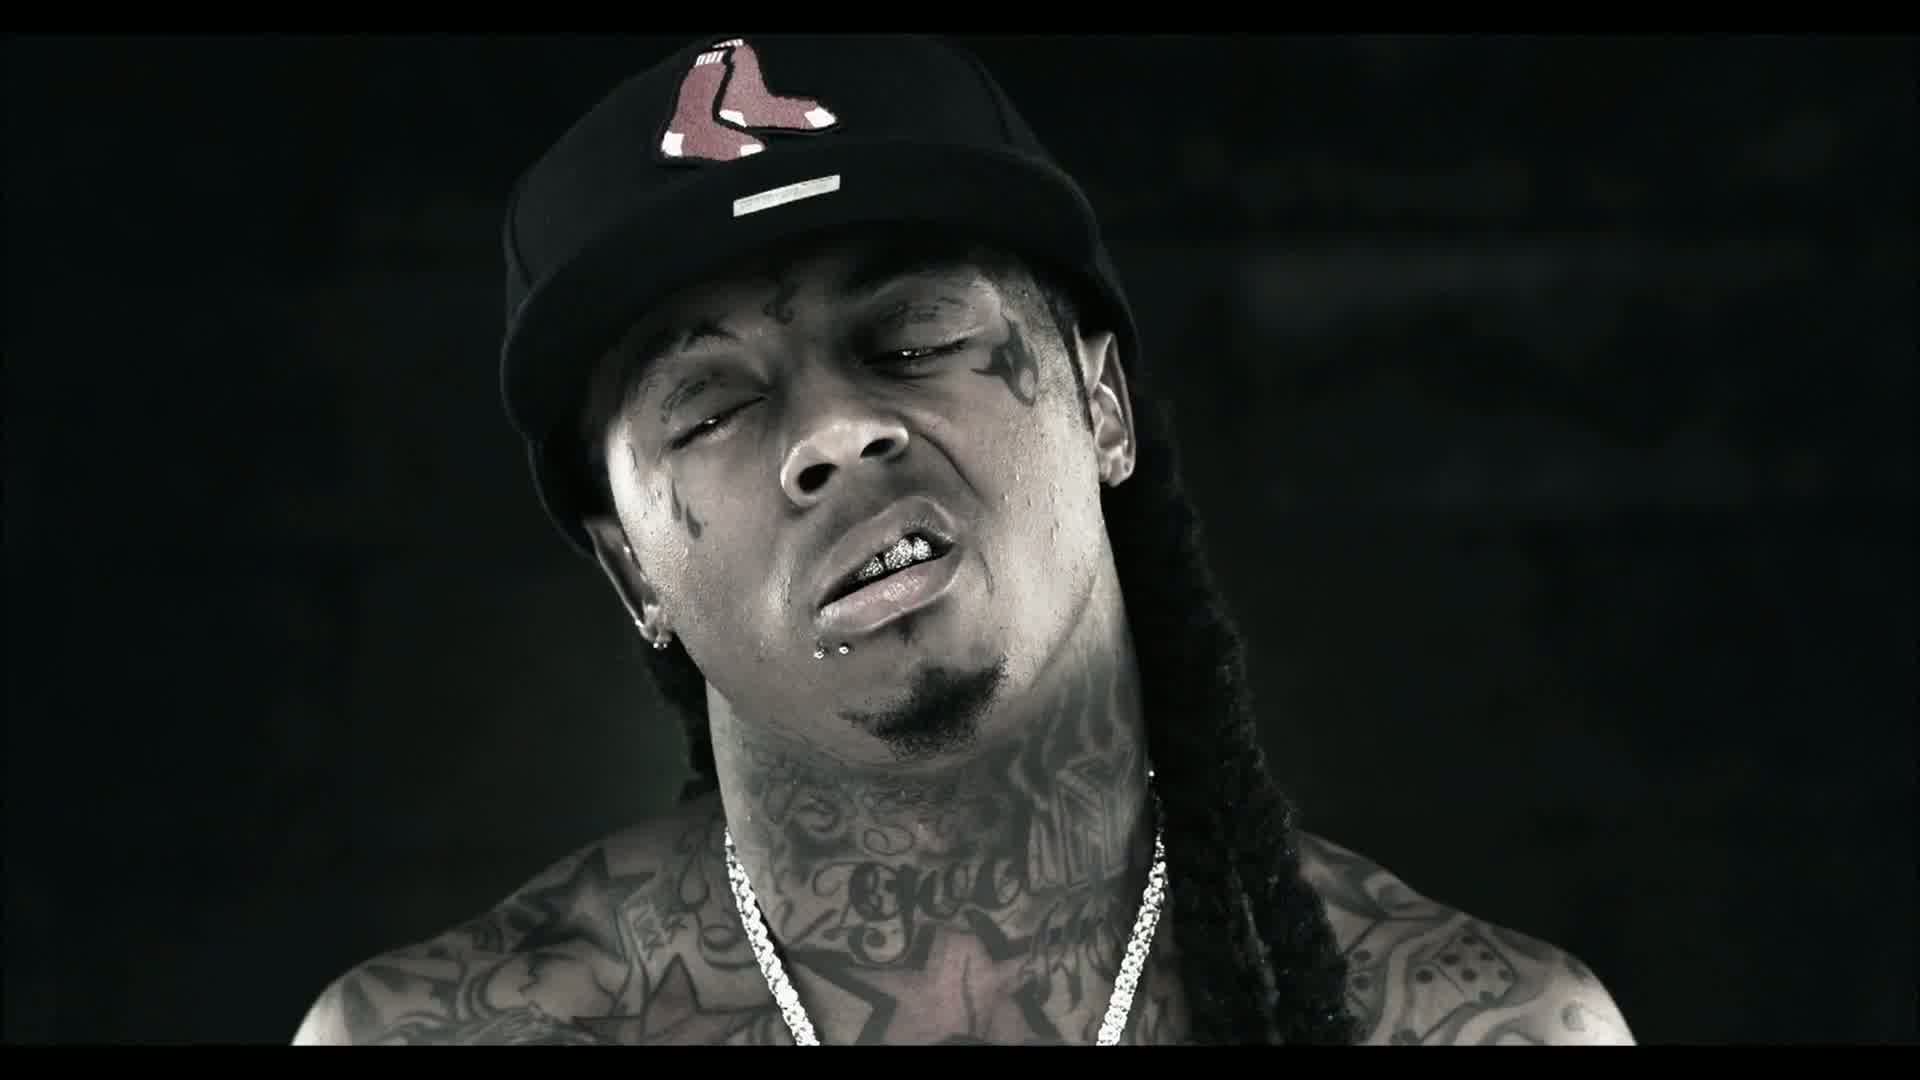 Lil Wayne 1080p  Wallpaper, High Definition, High Quality, Widescreen